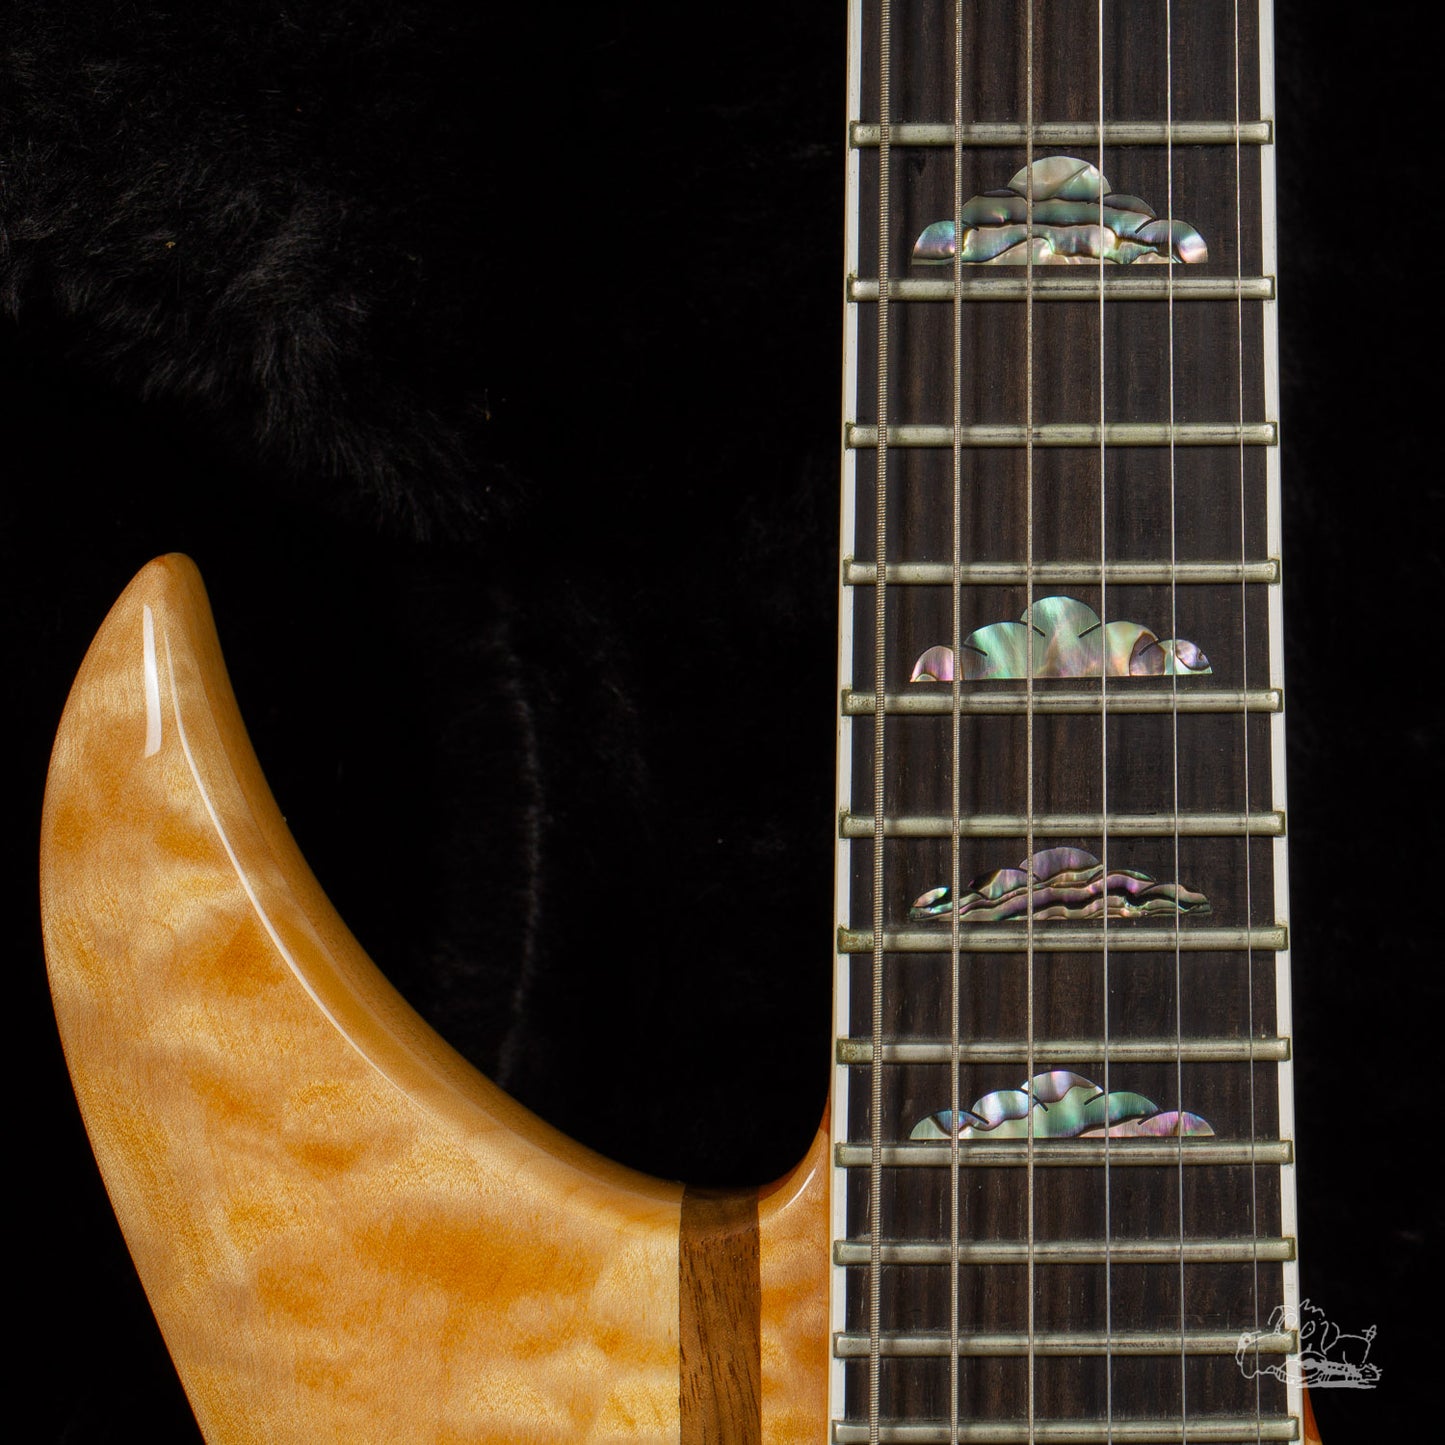 2009 BC Rich Bich 10 Supreme - 10-String Guitar